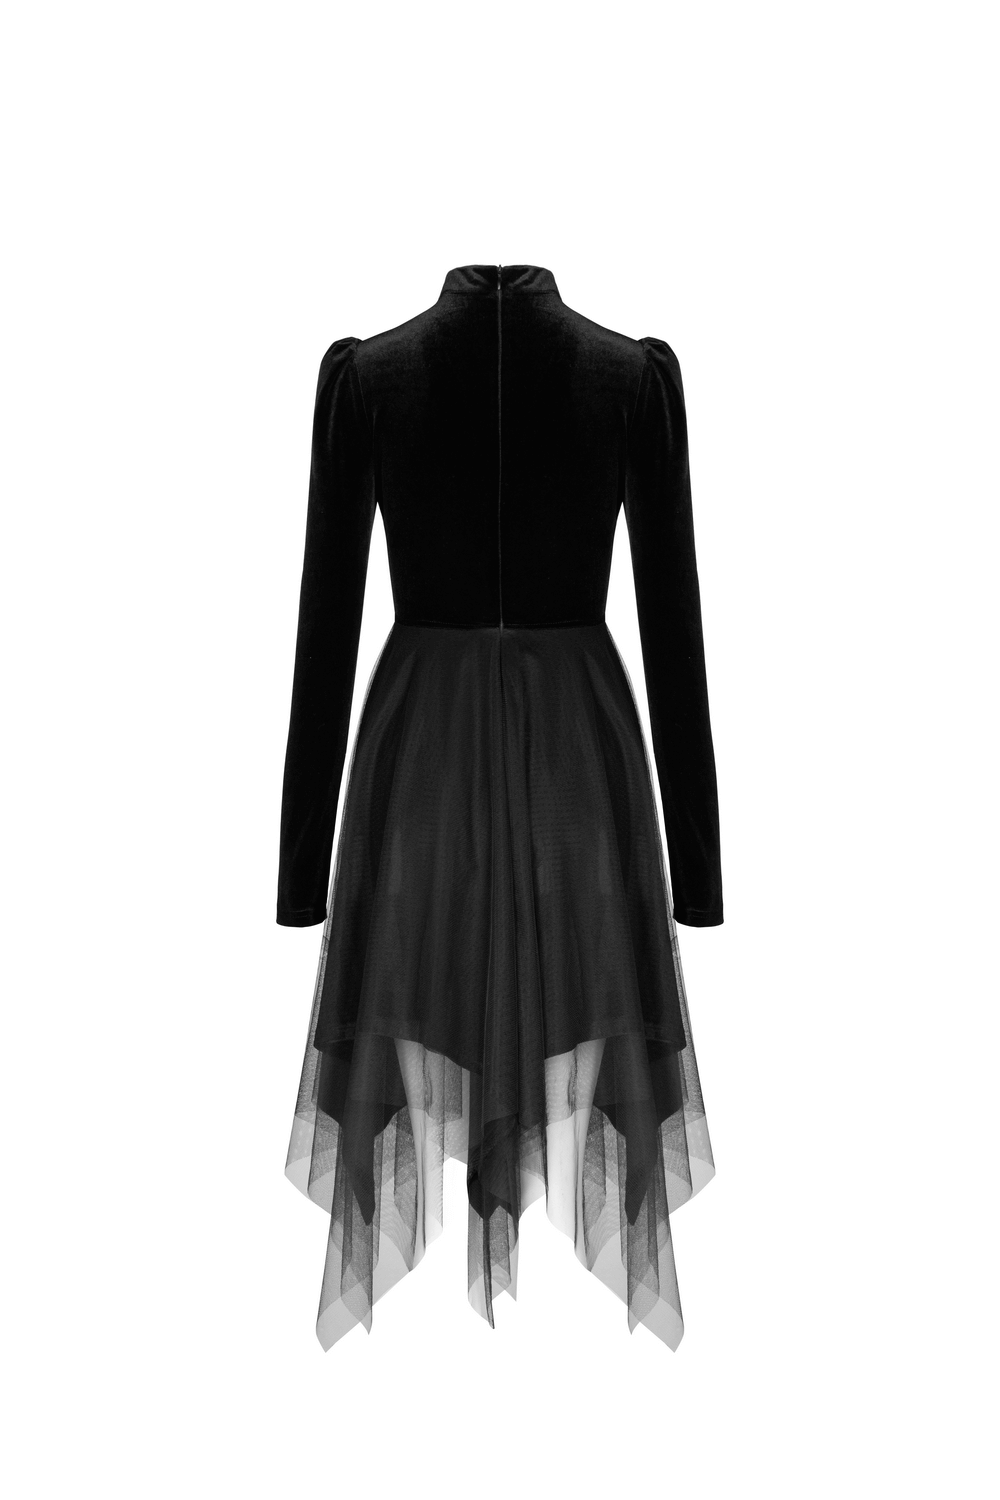 Punk Rave Black Velvet Witch Dress Gothic Lolita Style - HARD'N'HEAVY